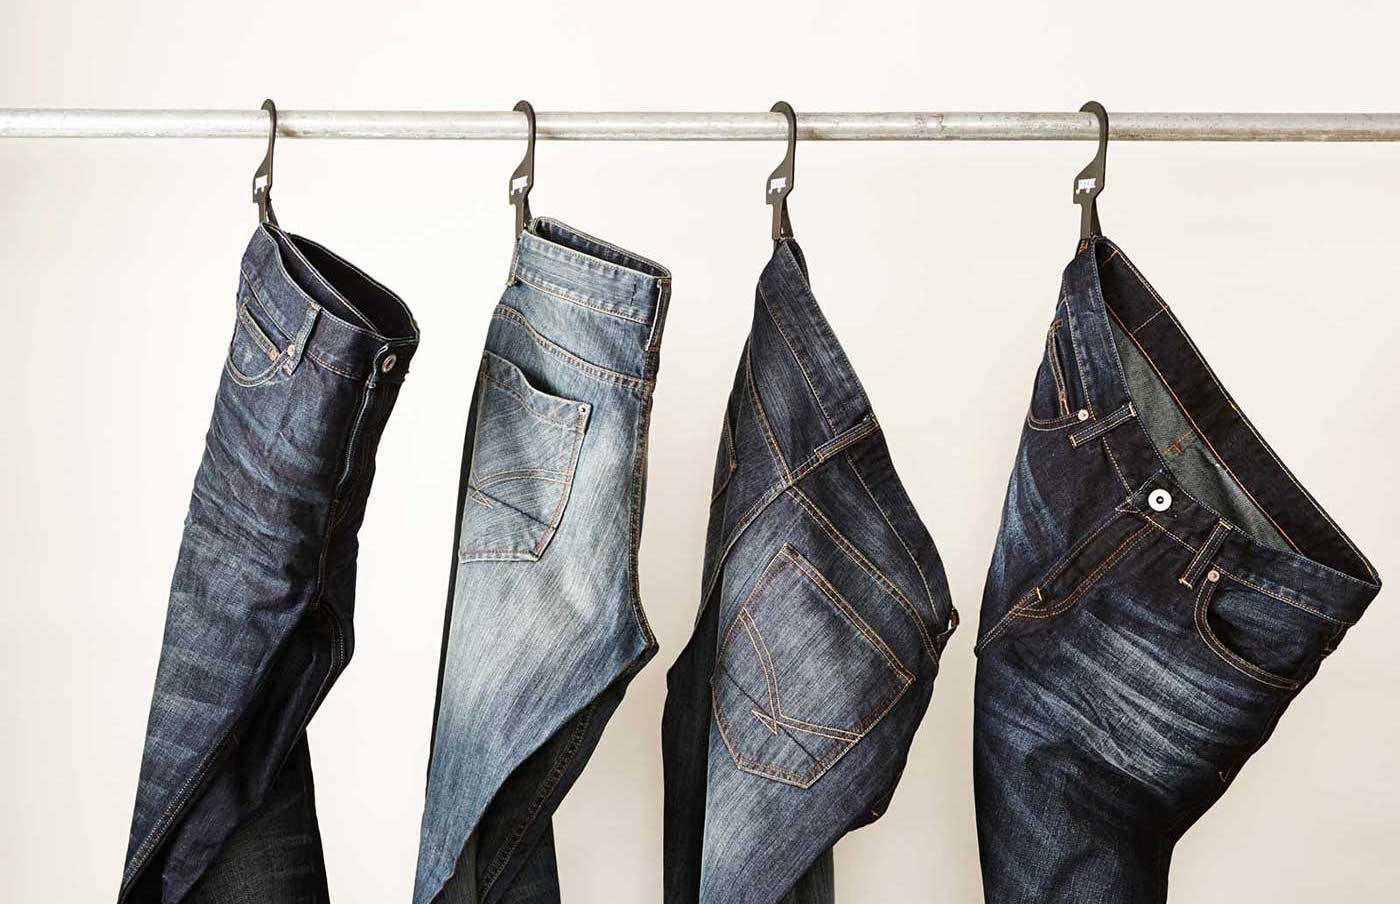 Man wearing jeans folding up pant leg - Stock Image - Everypixel